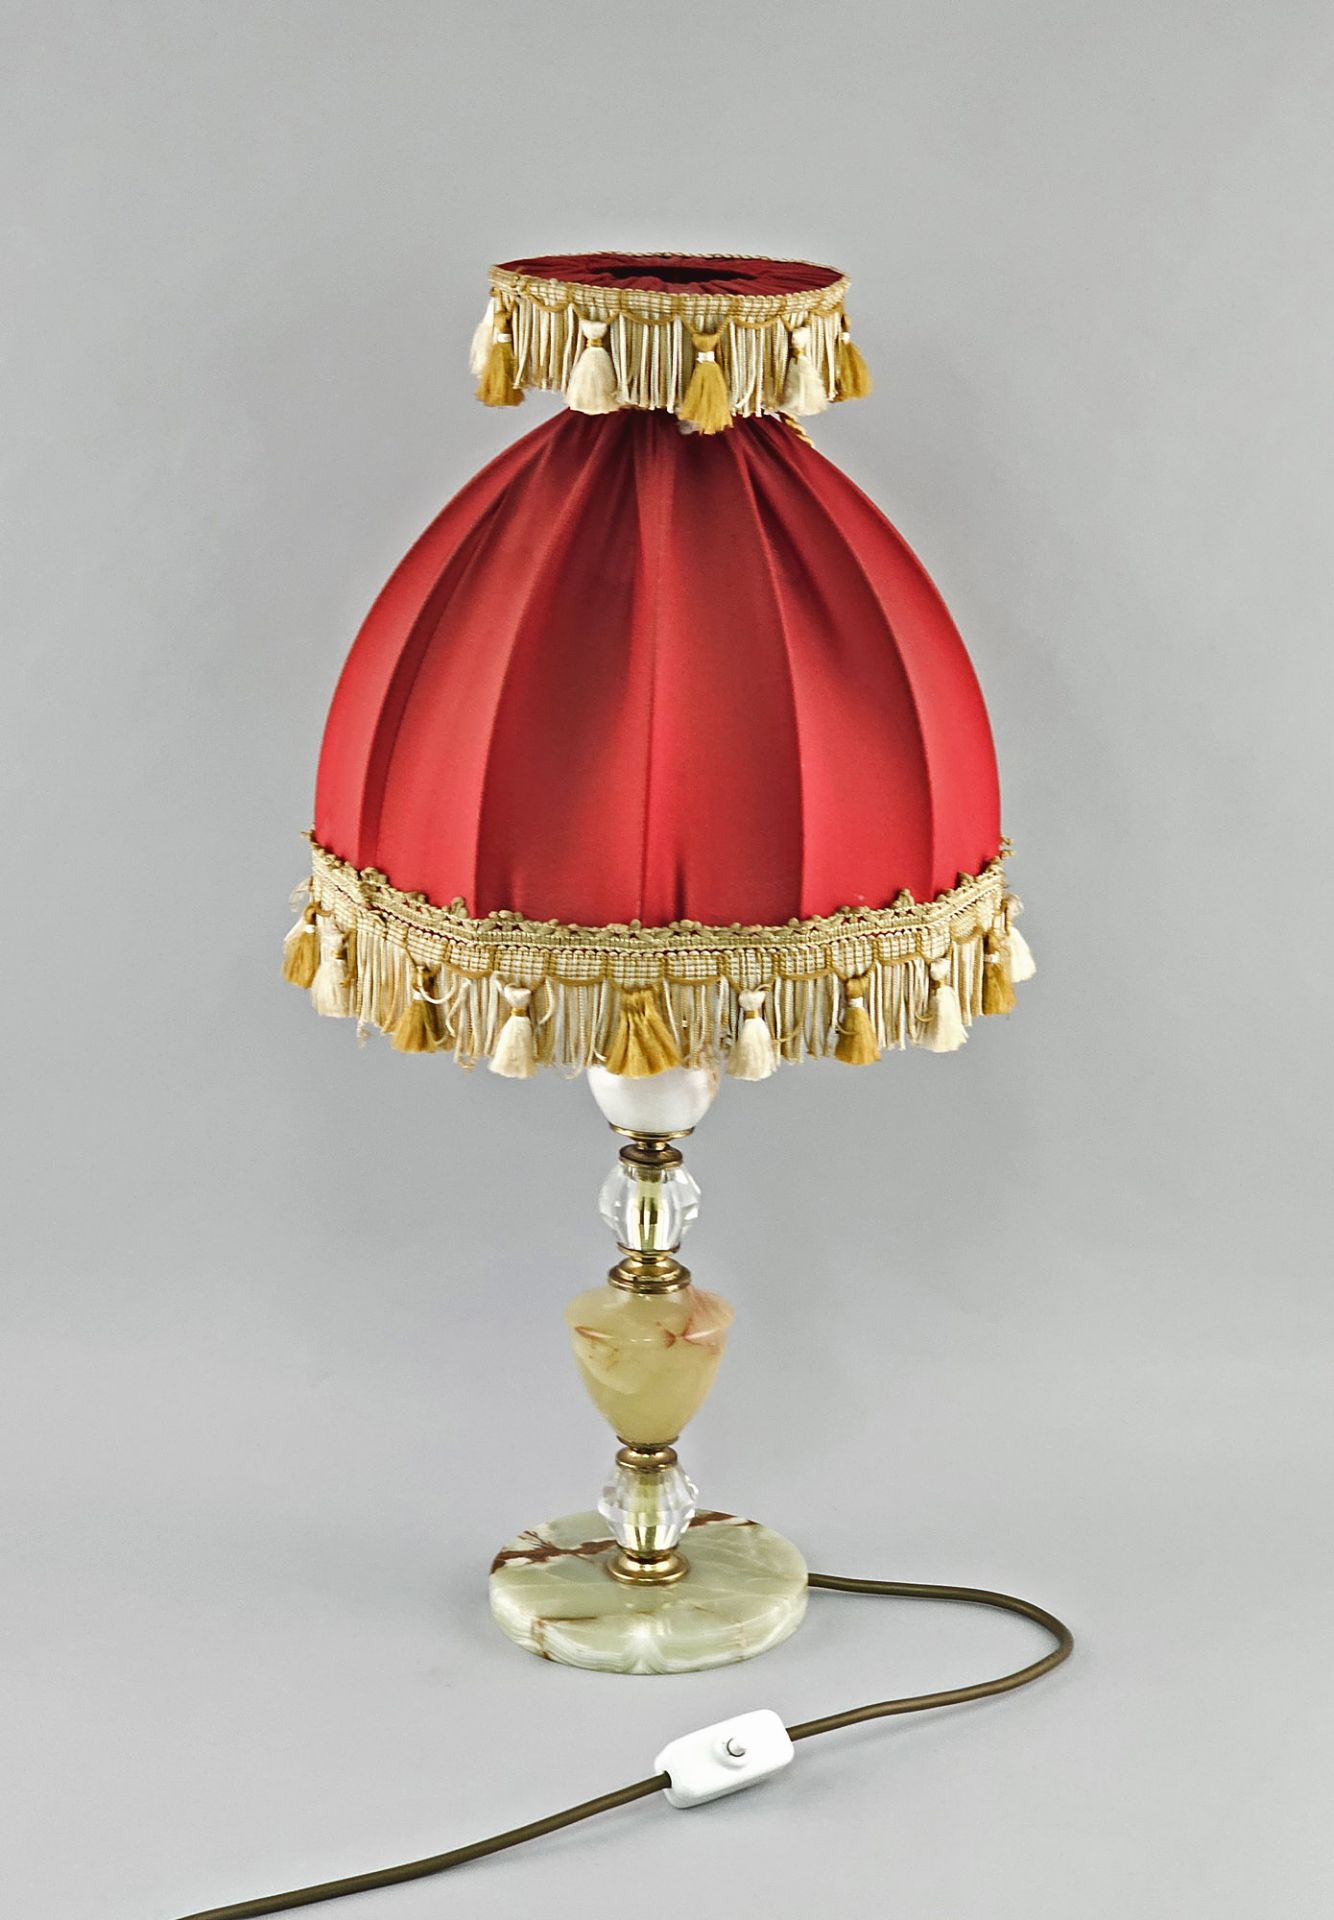 Salon-Tischlampe Onyxfuß Historismusstil